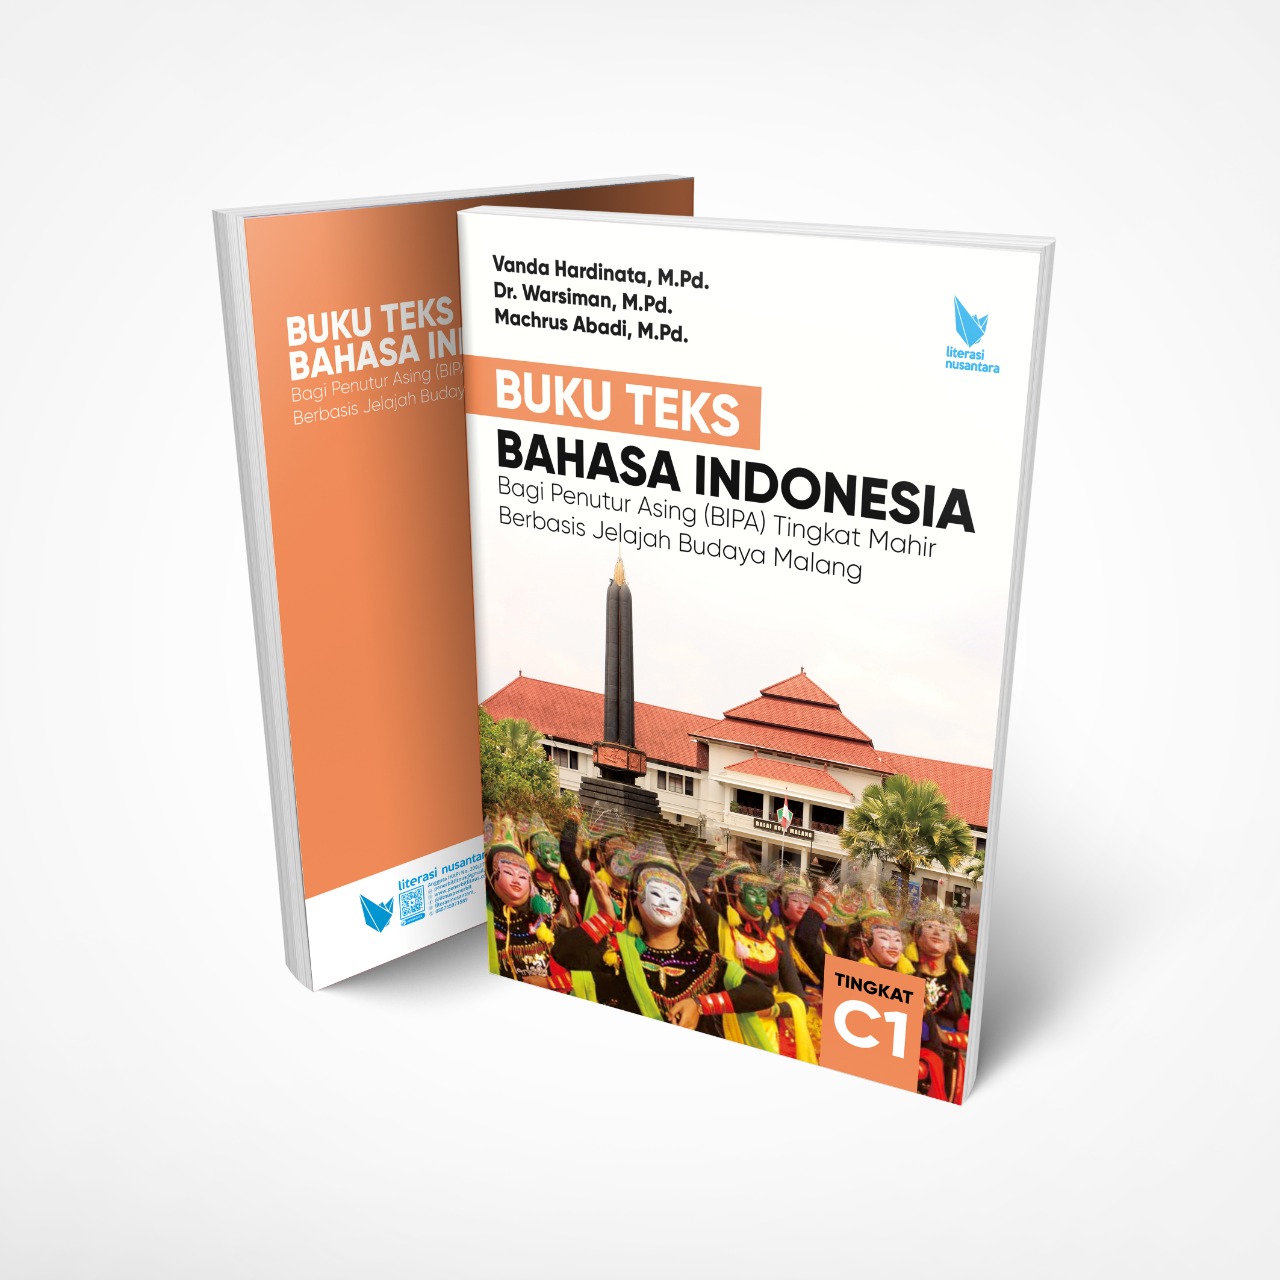 Buku teks bahasa indonesia